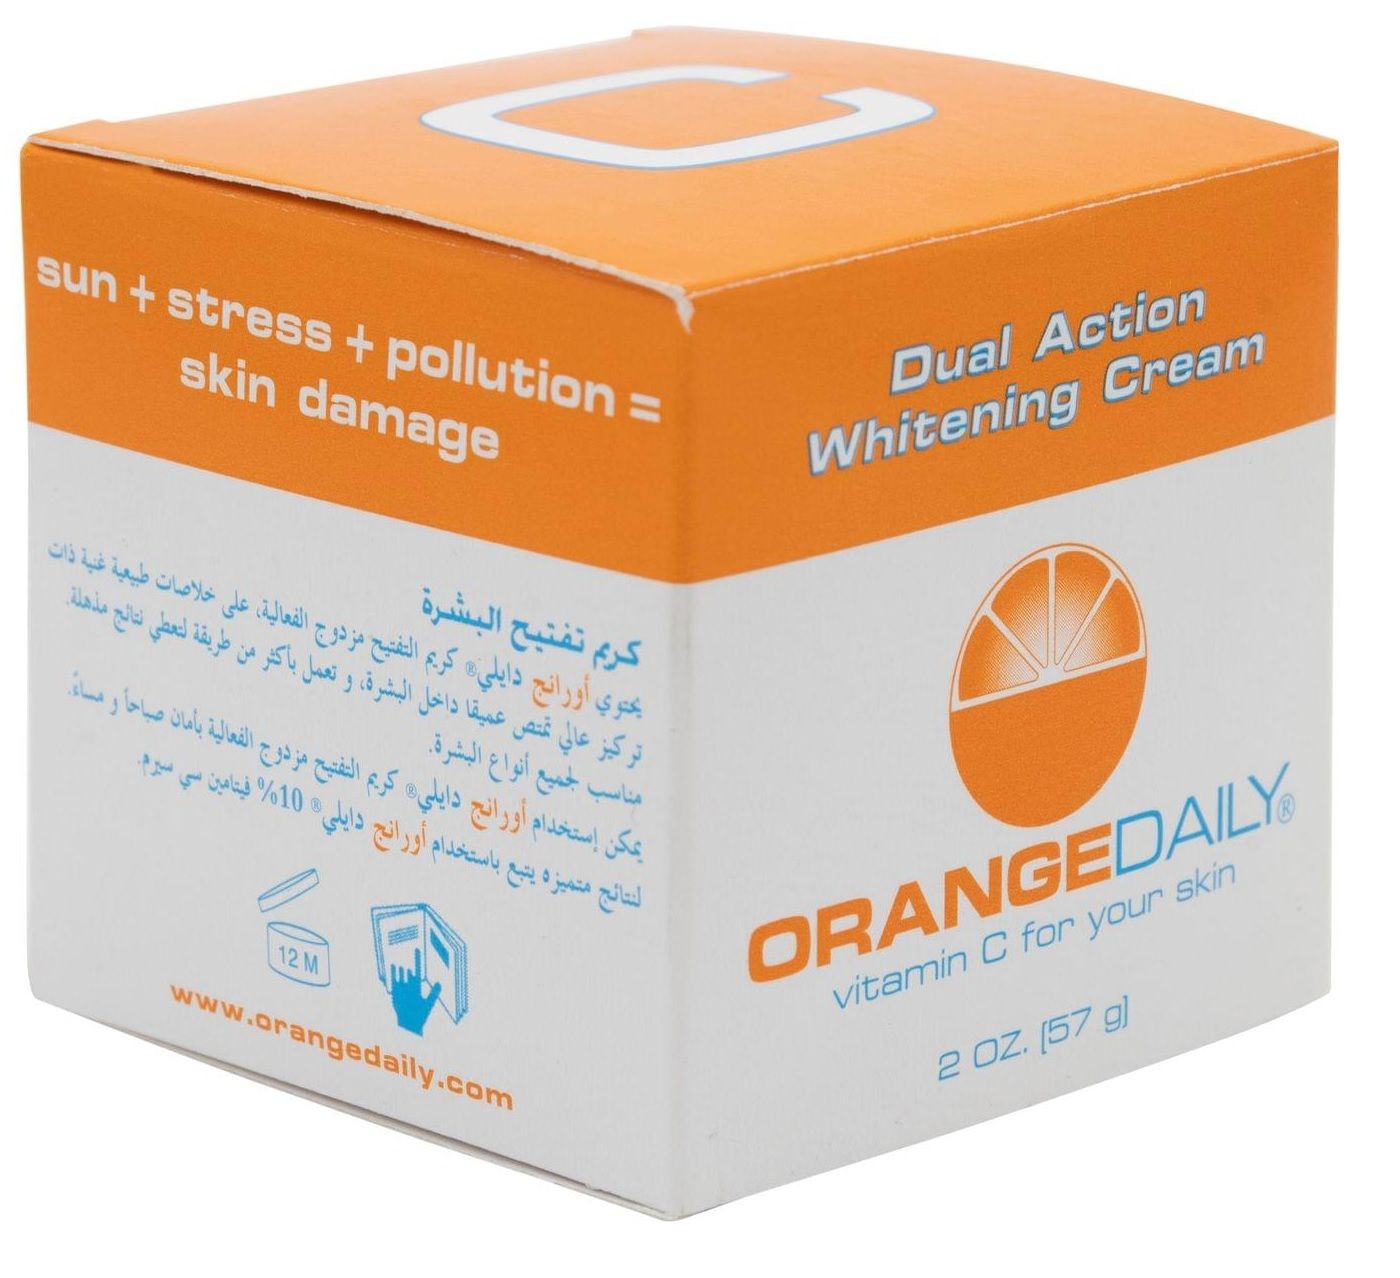 ORANGE DAILY Dual Action Whitening Cream- 57gm